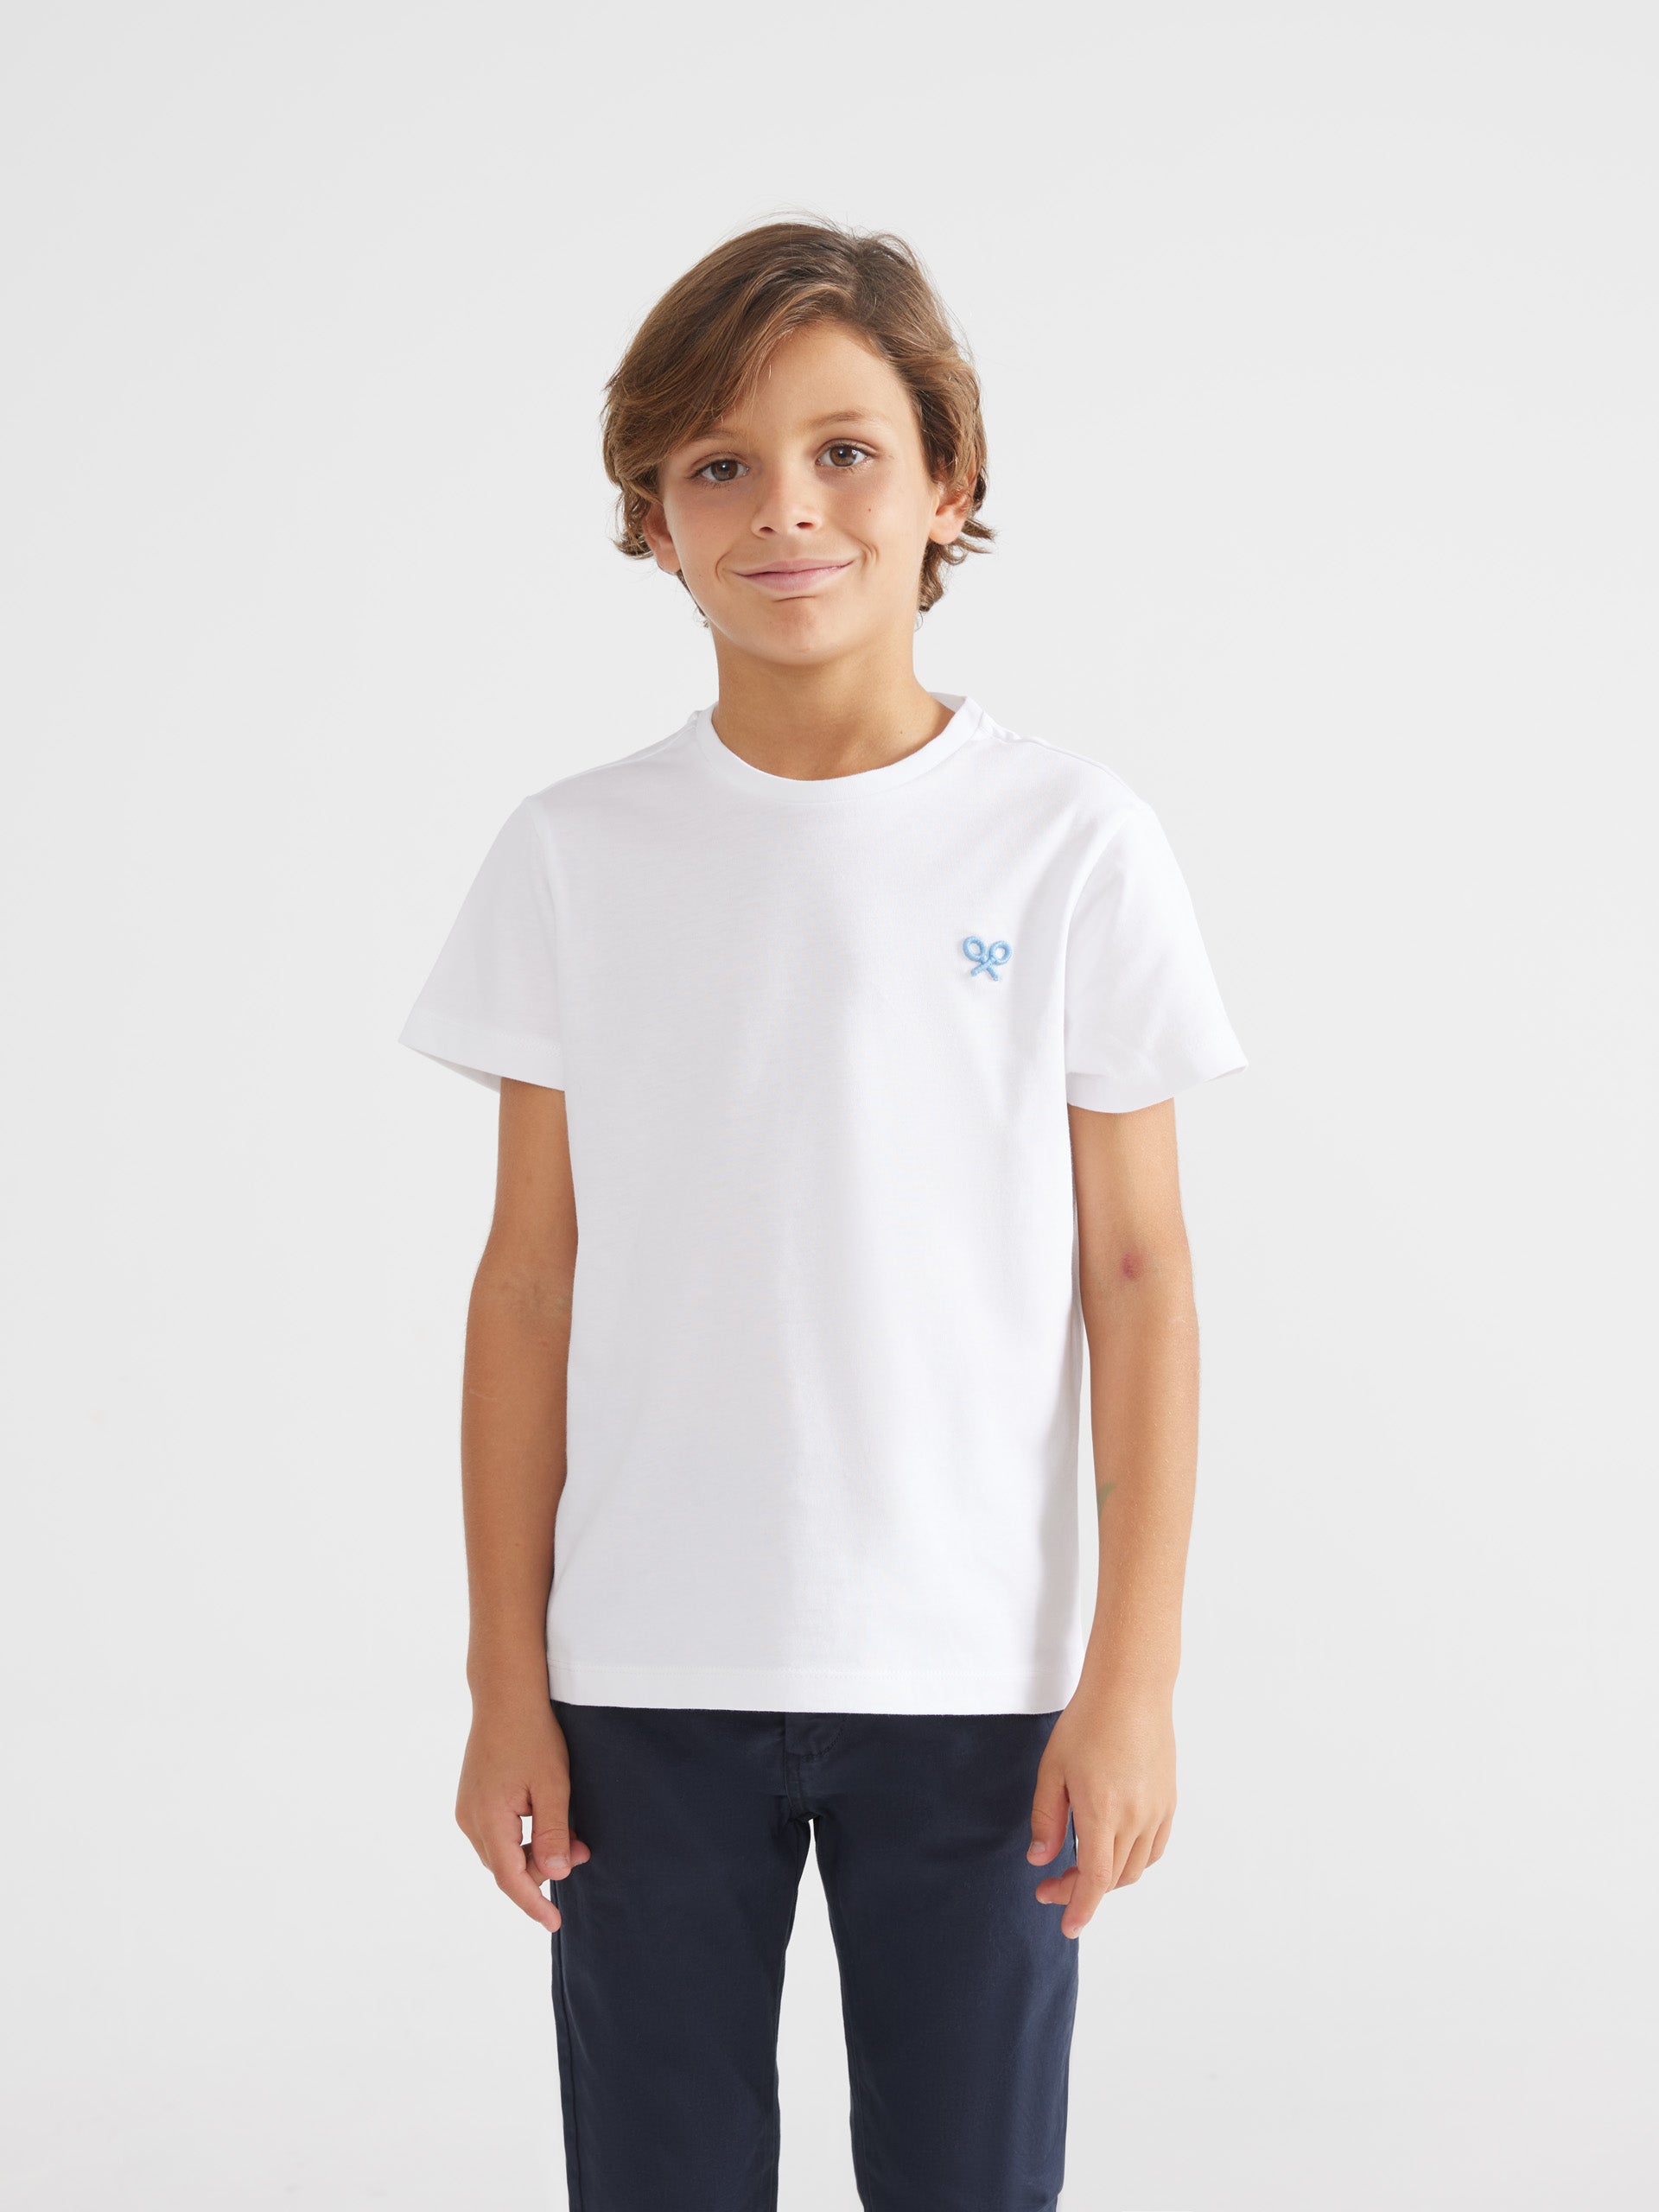 T-shirt blanc ambiance hivernale enfant